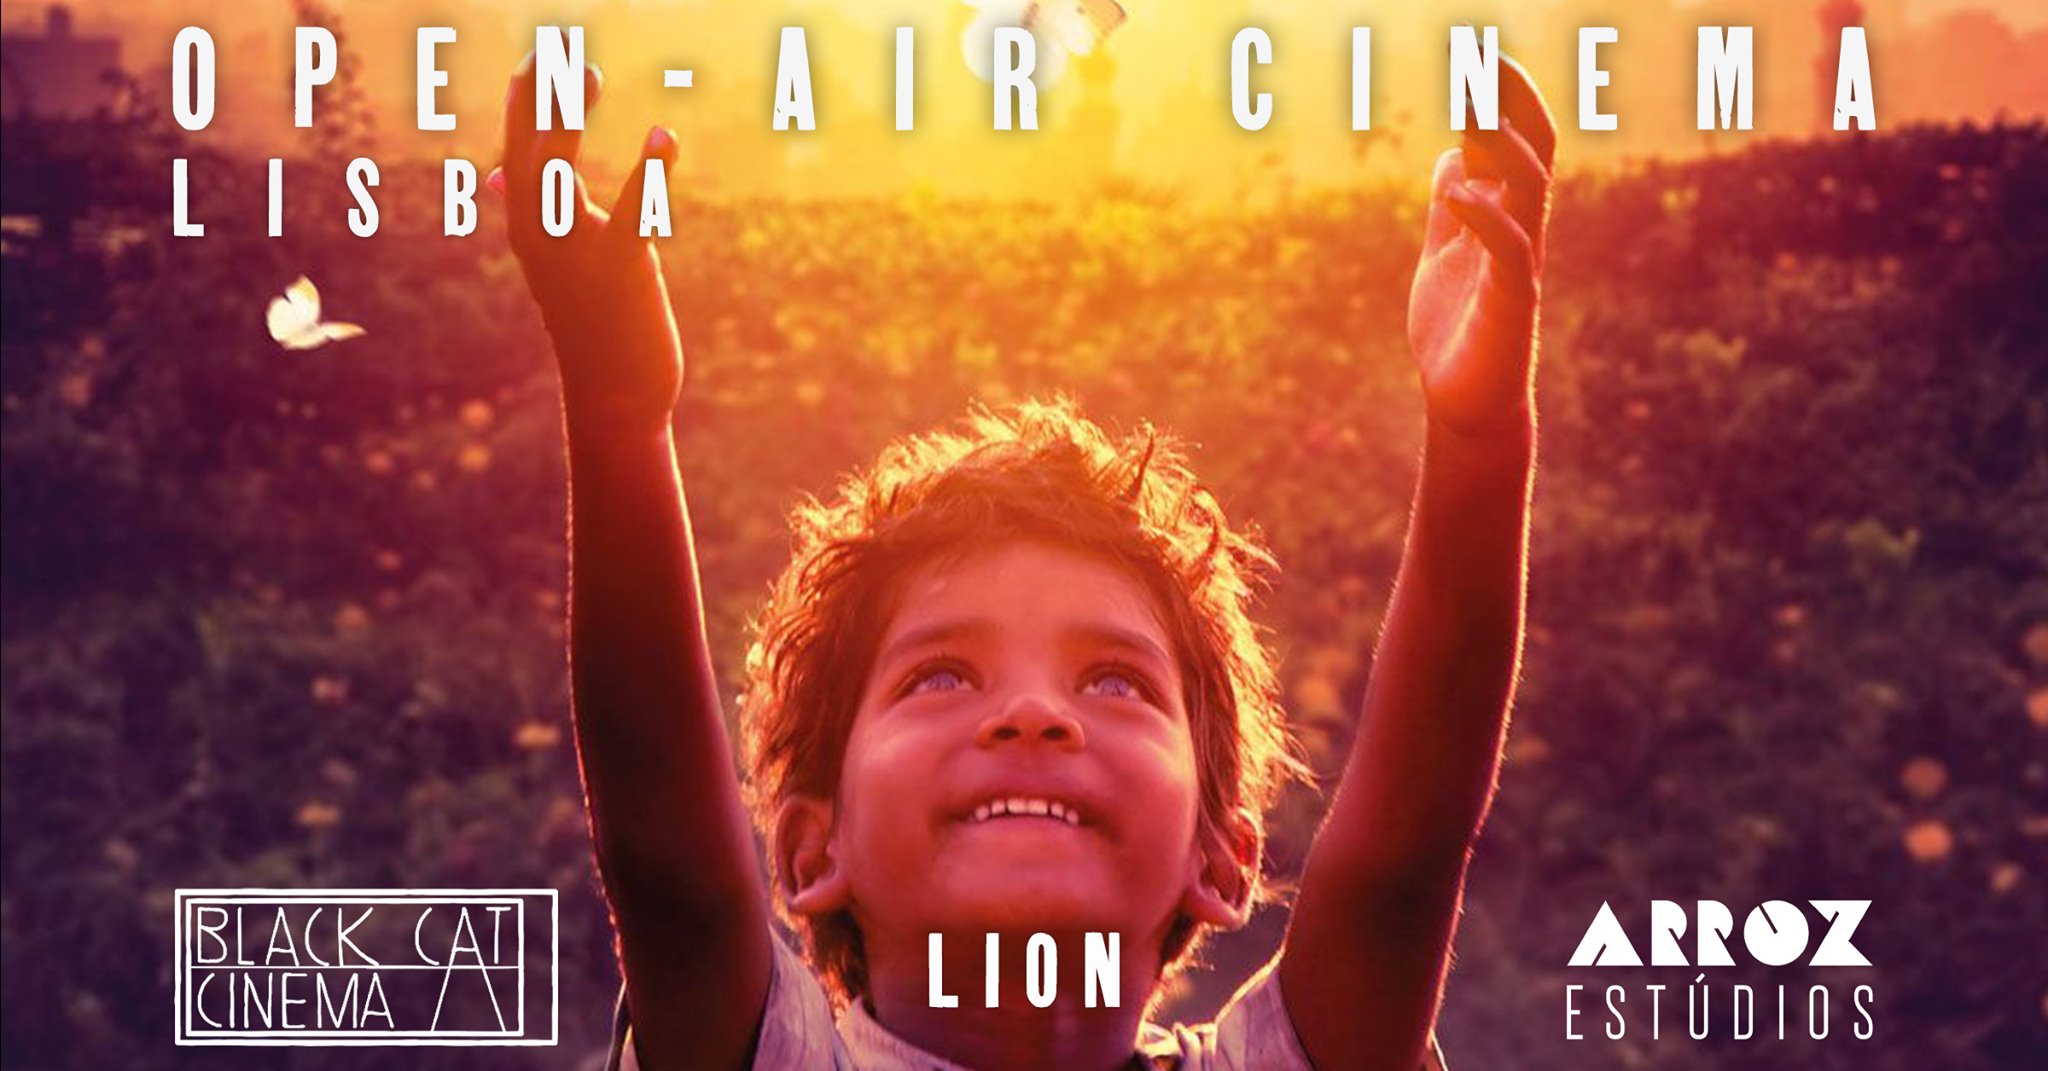 Open-air cinema: Lion